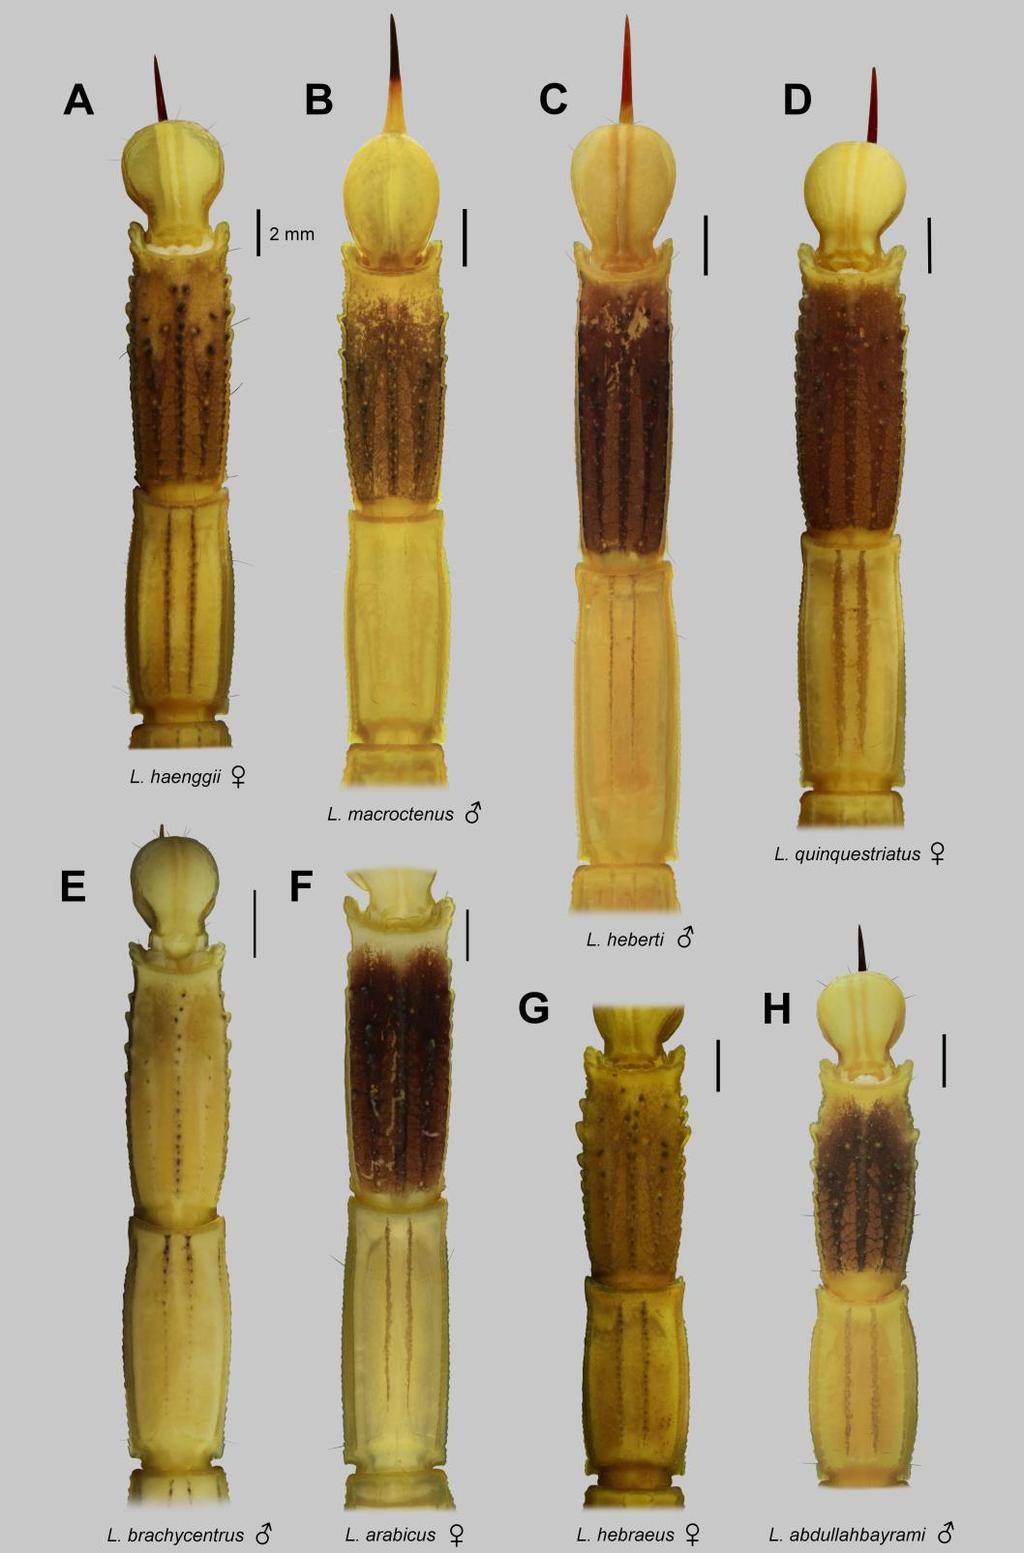 110 Euscorpius 2014, No. 191 Figure 91: Pigmentation patterns of metasoma IV, V of Leiurus species, ventral aspect. A. L. haenggii sp. n., holotype female, Ta if, Saudi Arabia (NHMB 17k). B. L. macroctenus sp.